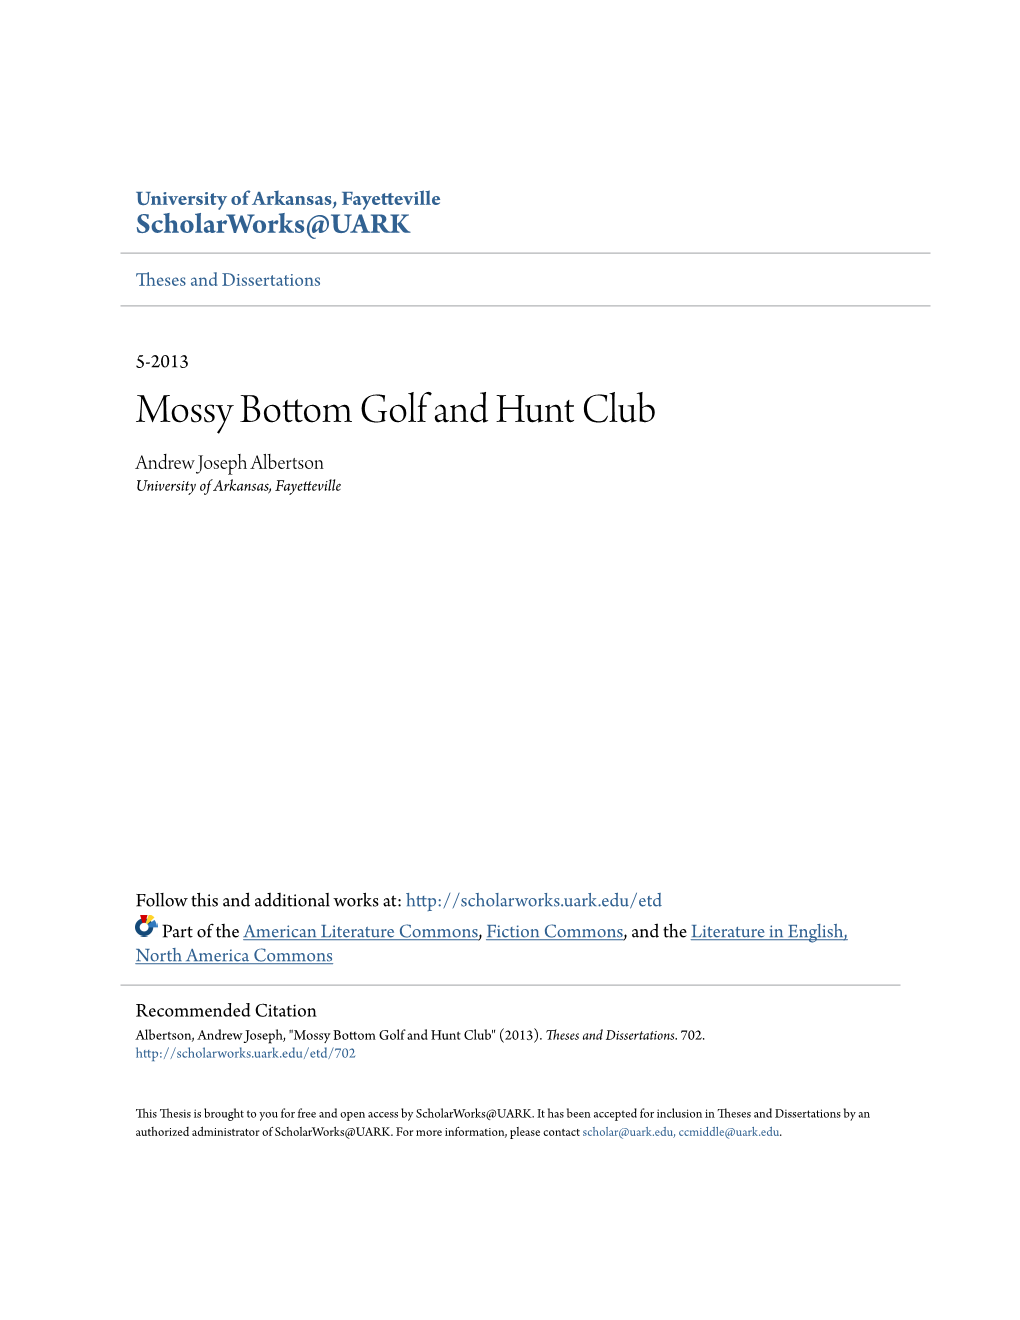 Mossy Bottom Golf and Hunt Club Andrew Joseph Albertson University of Arkansas, Fayetteville